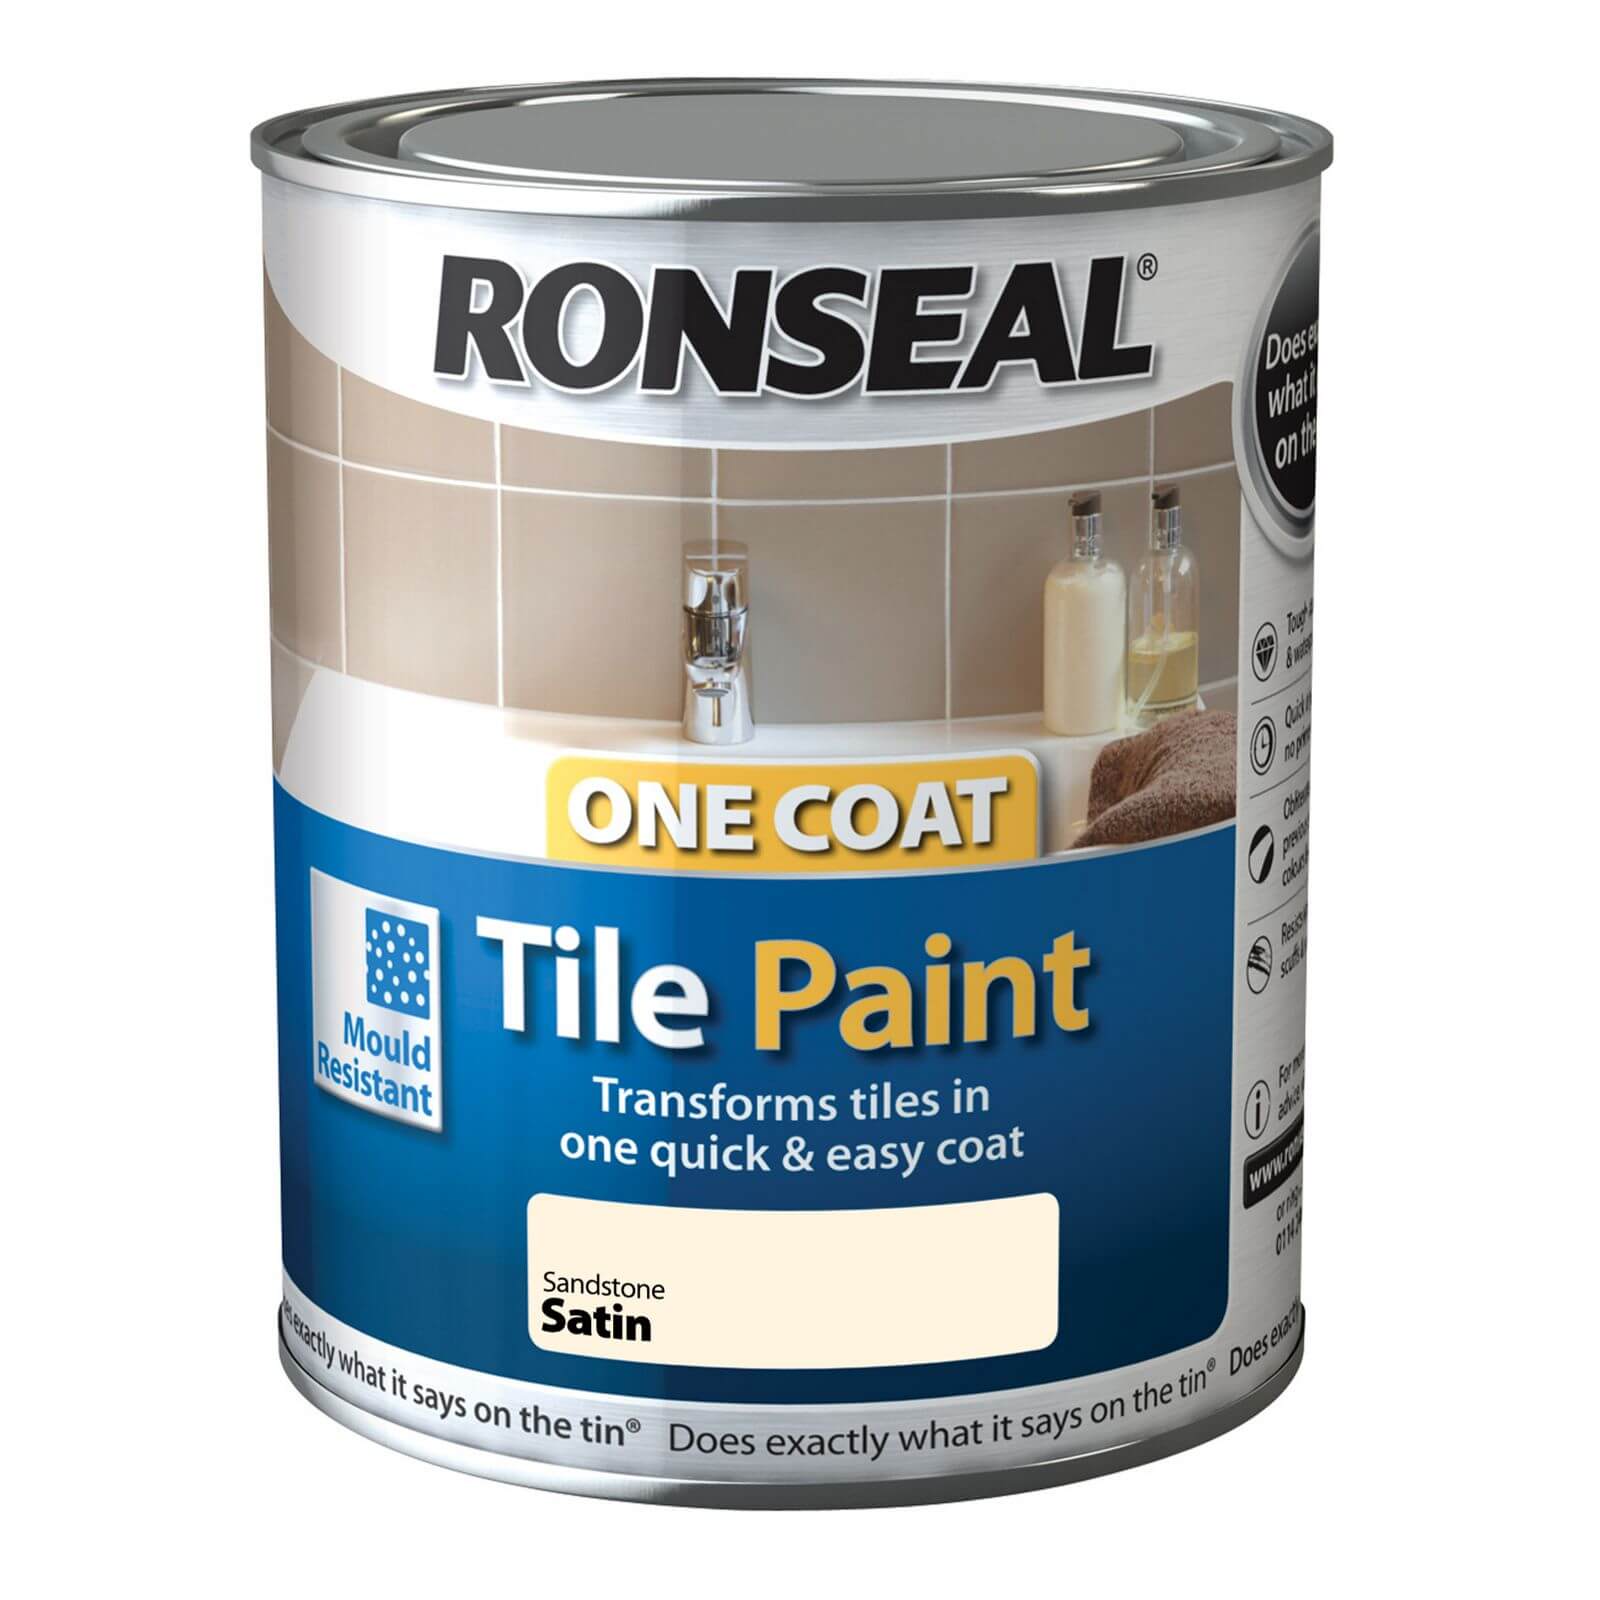 Ronseal One Coat Tile Paint Sandstone Satin - 750ml